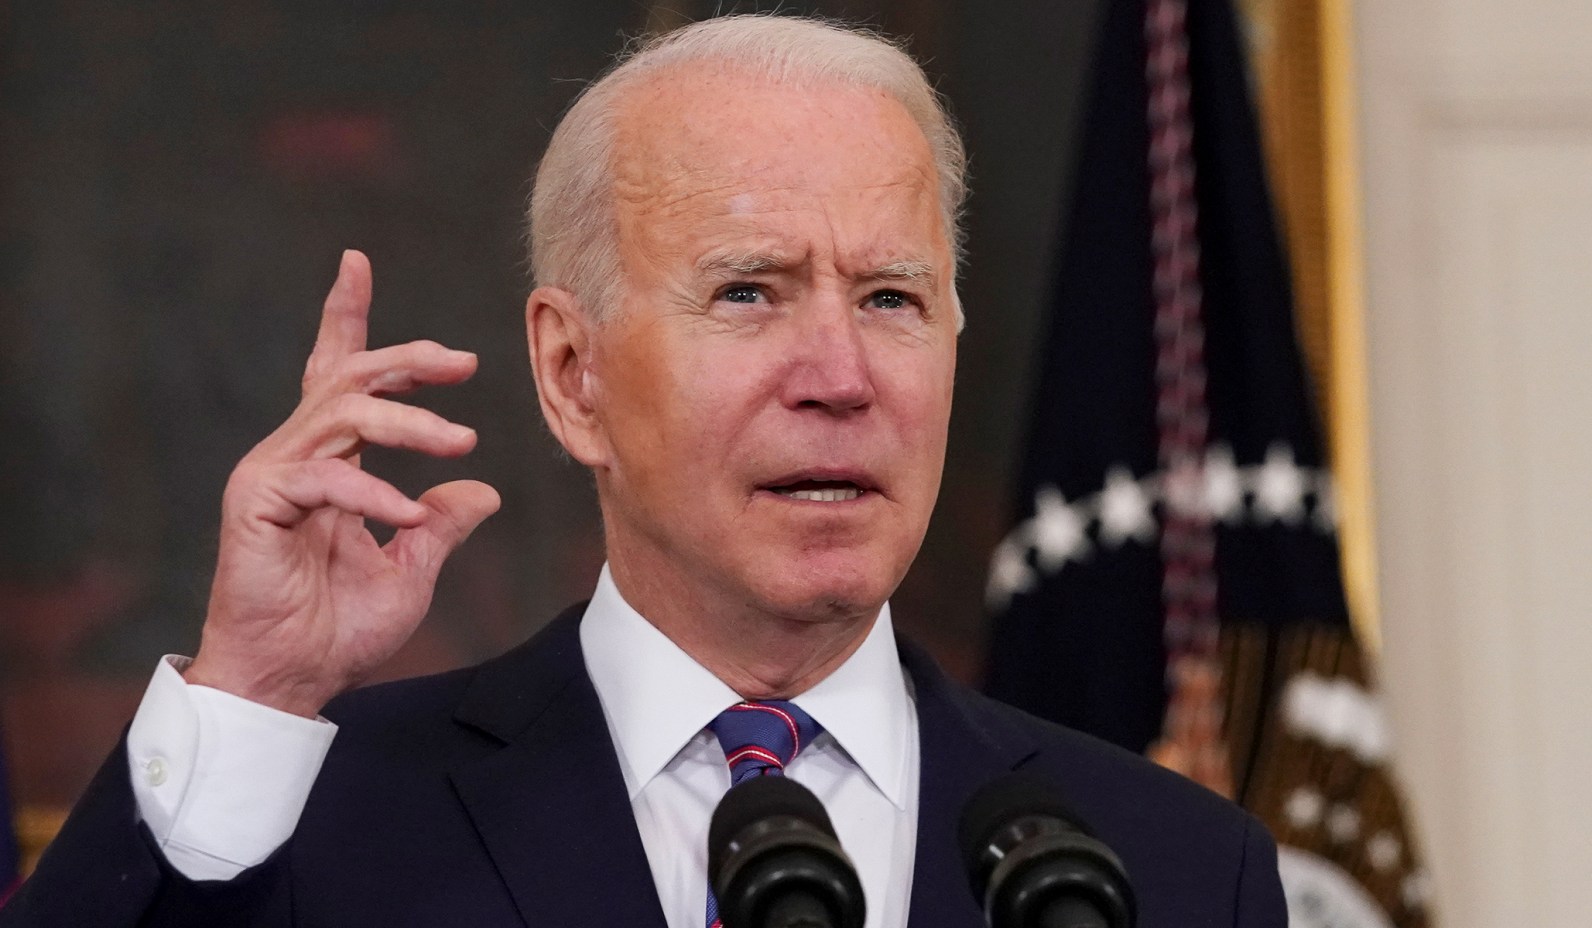 Joe-Biden-speaking - finger pointed